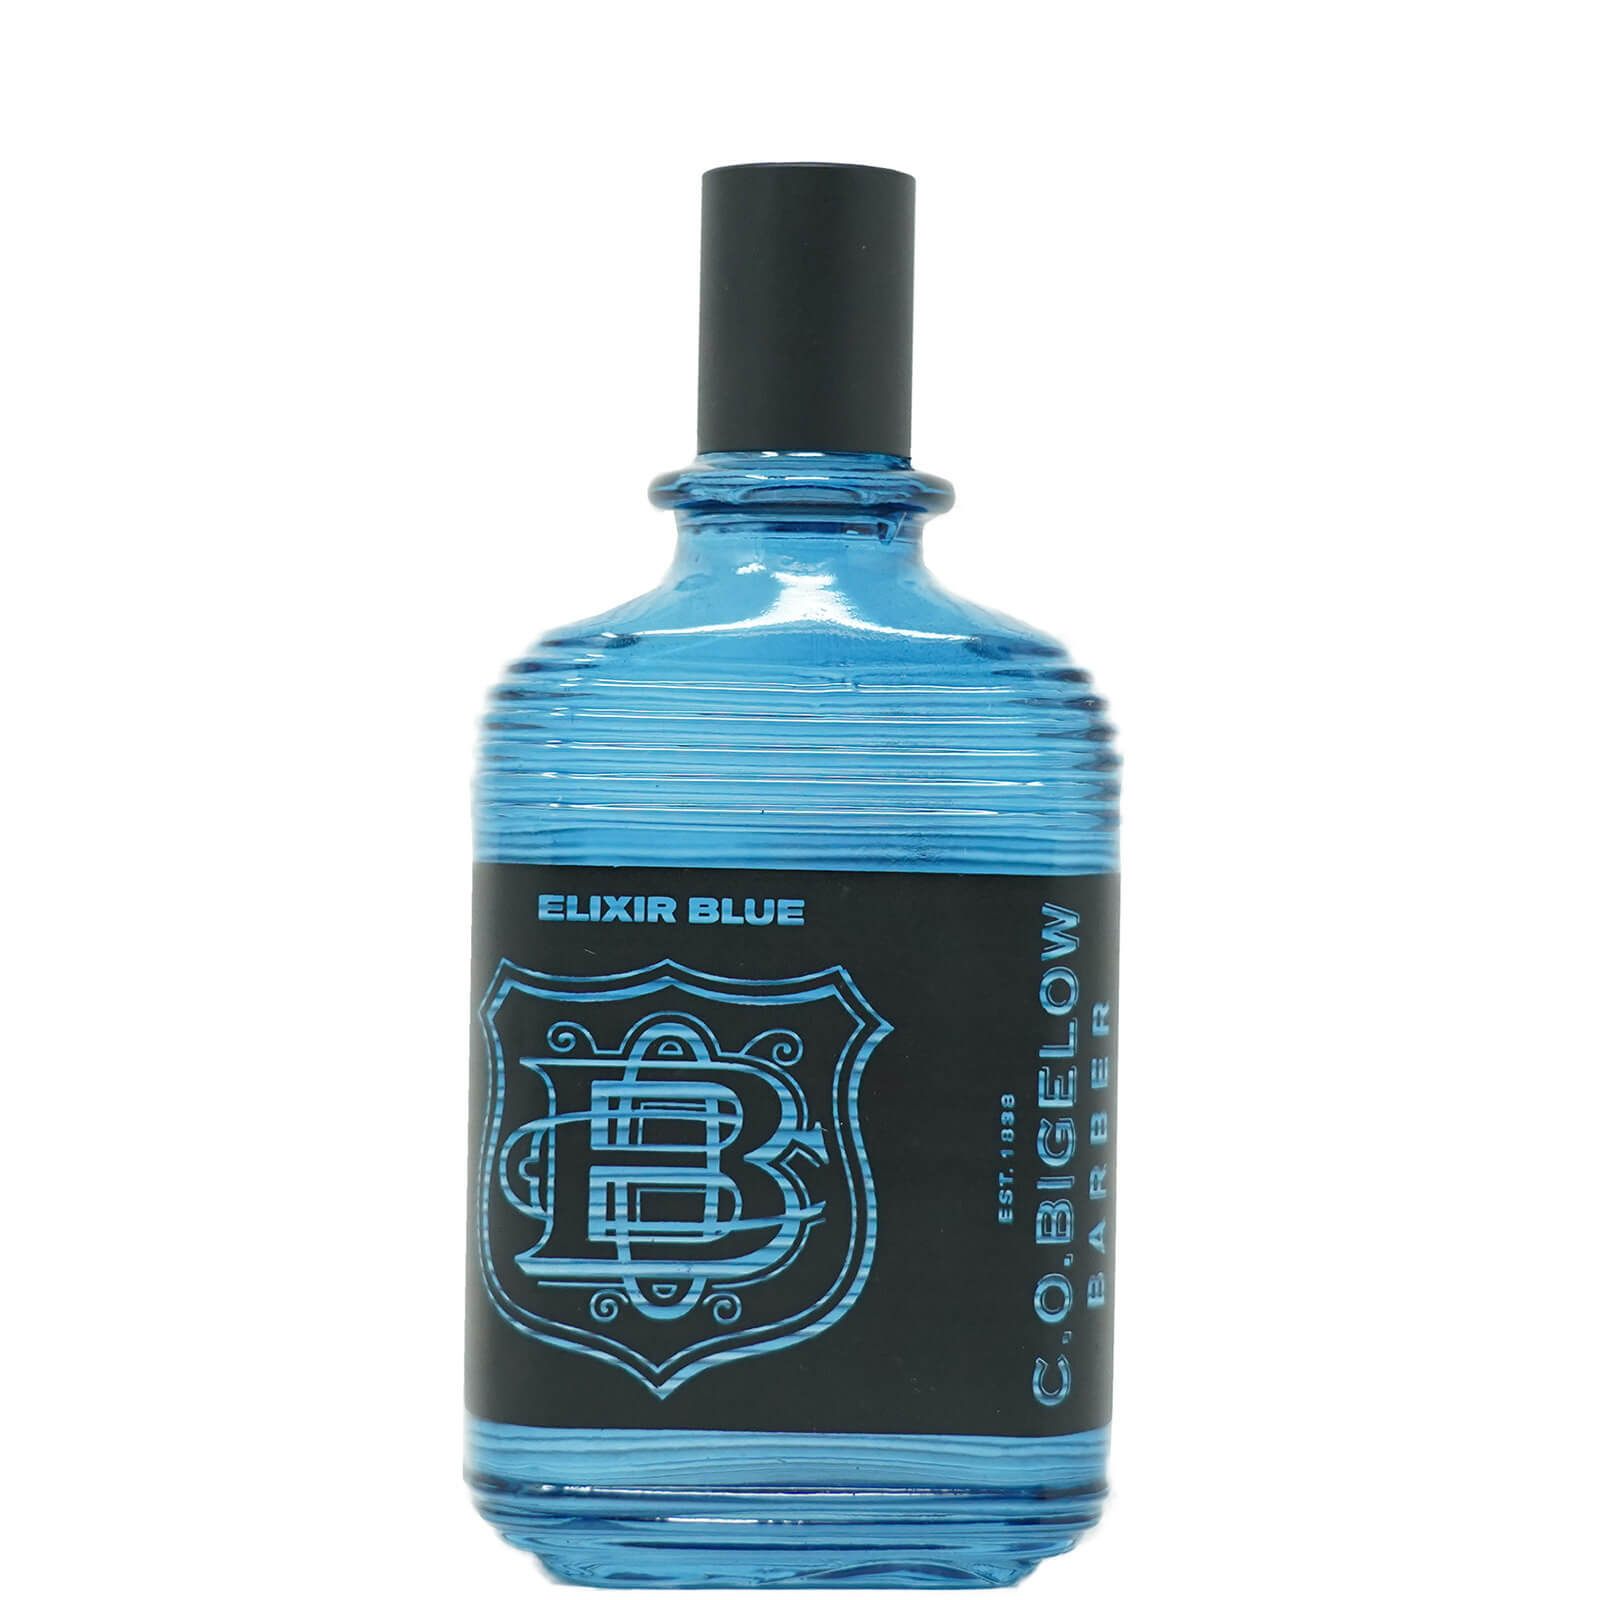 C.o. Bigelow Elixir Blue Cologne 2.4ml